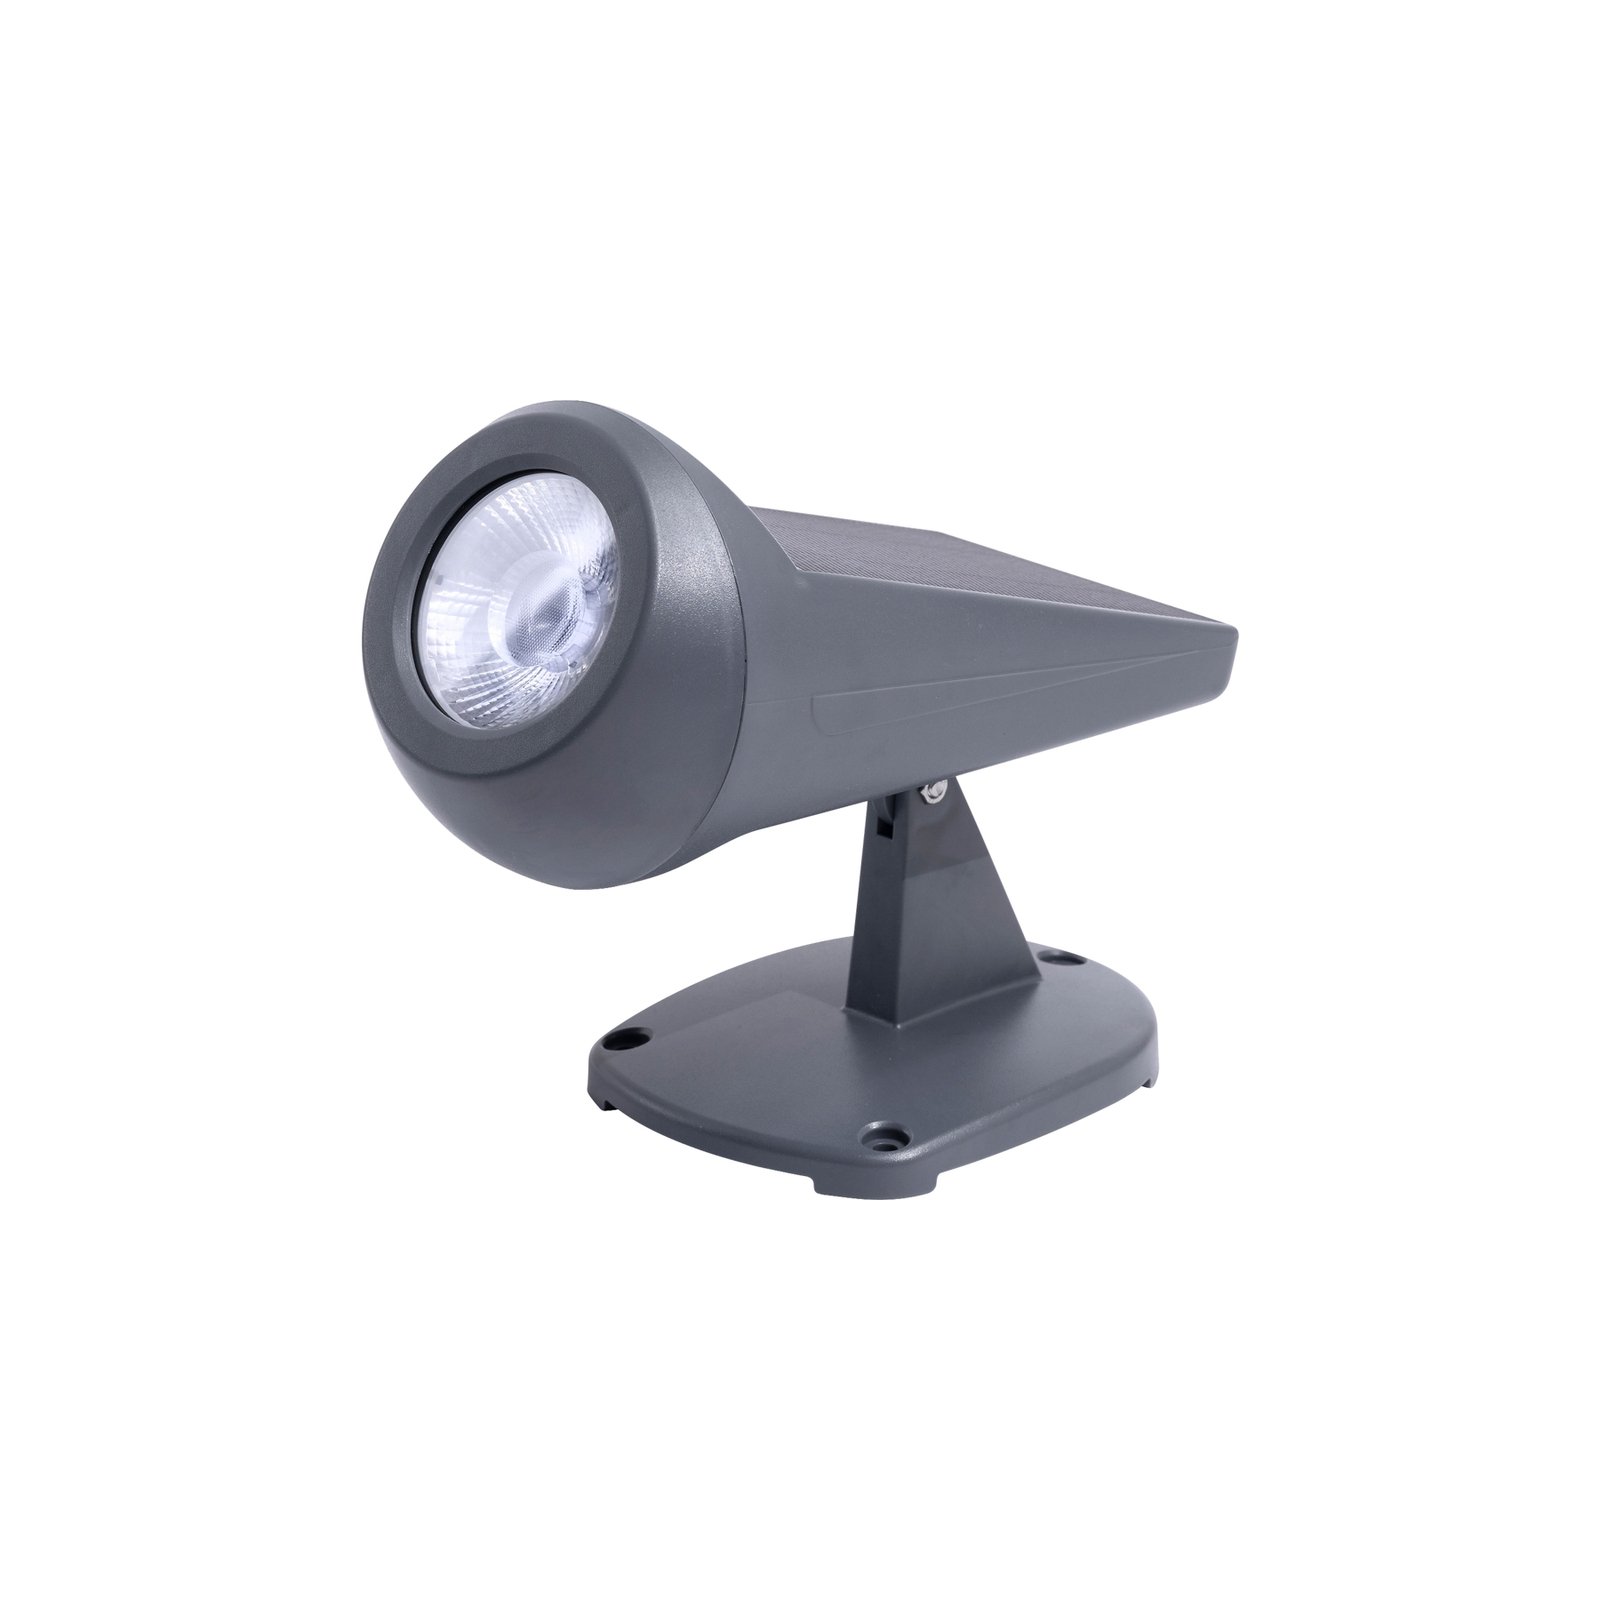 Spot LED solar spotlight daylight sensor dimmable